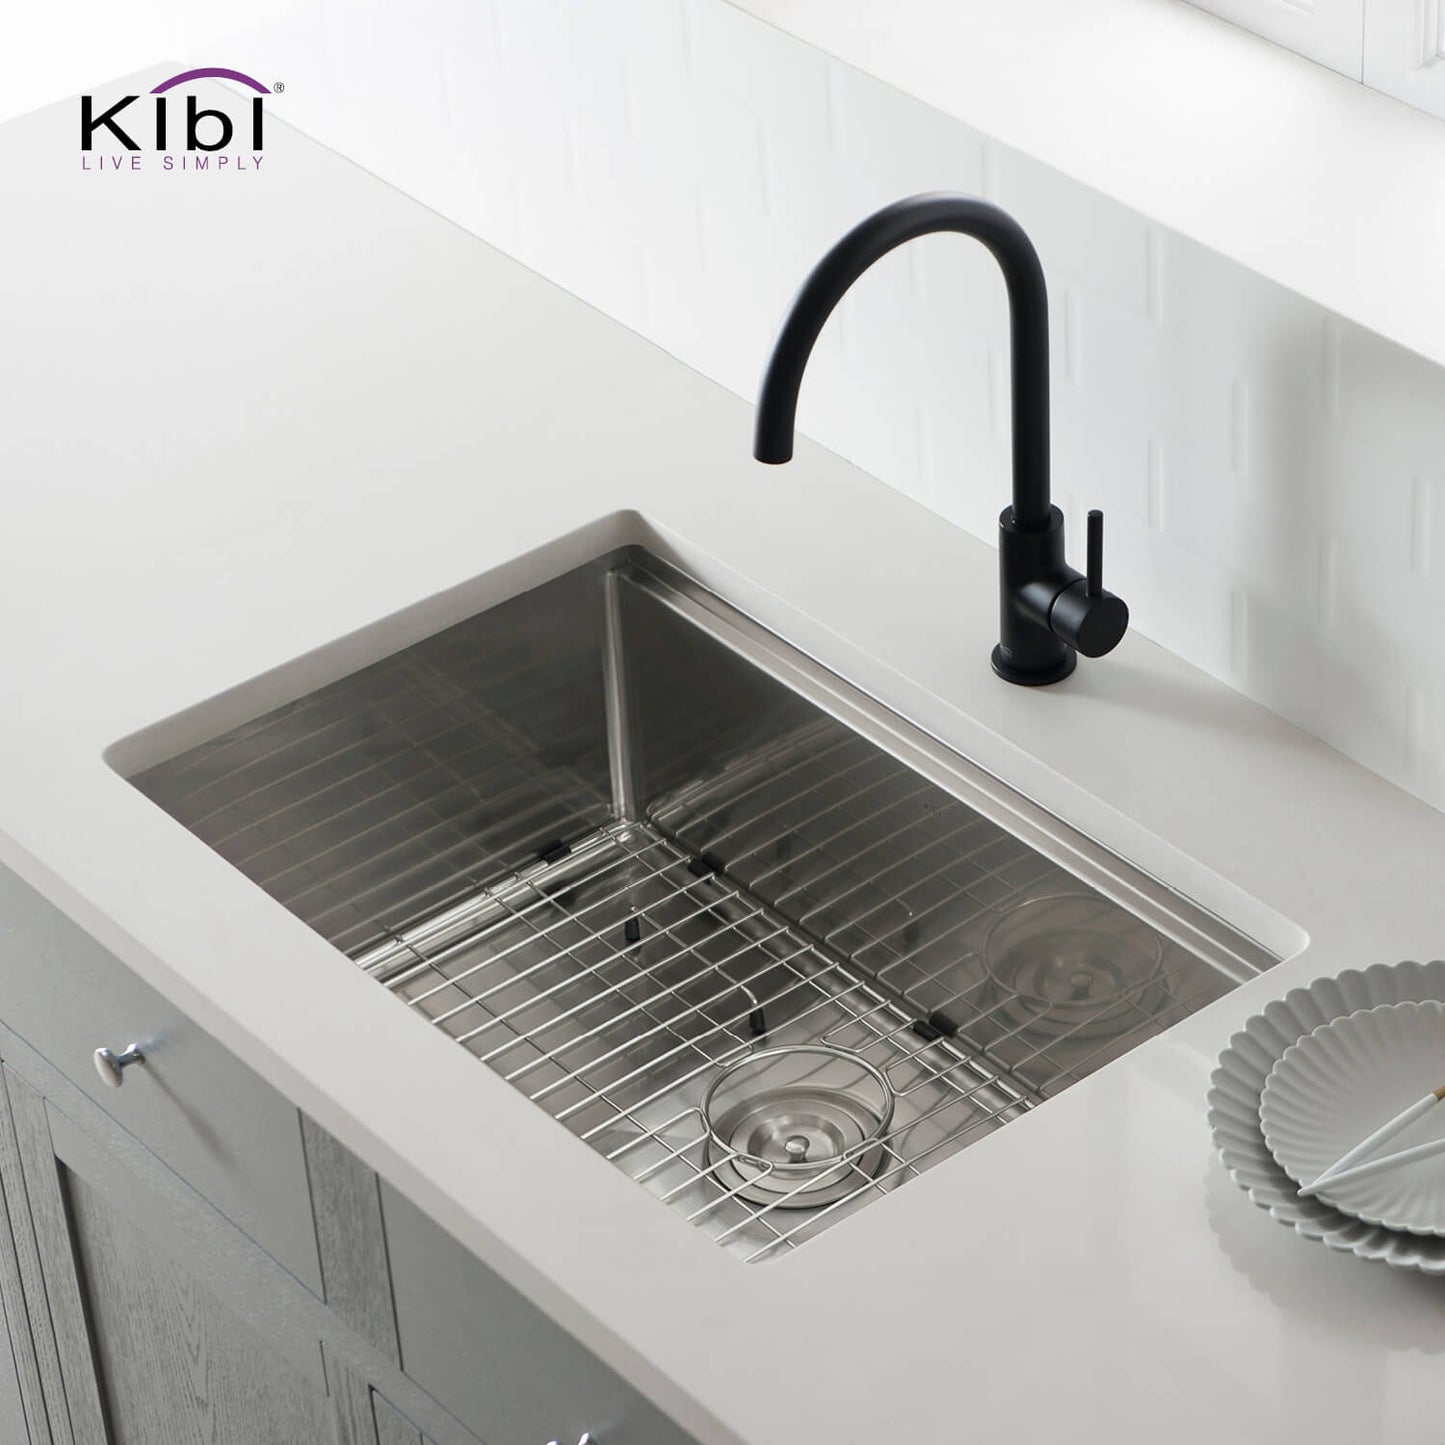 Kibi 28" x19" x 10" Single Bowl Undermount Workstation Sink In Satin Finish